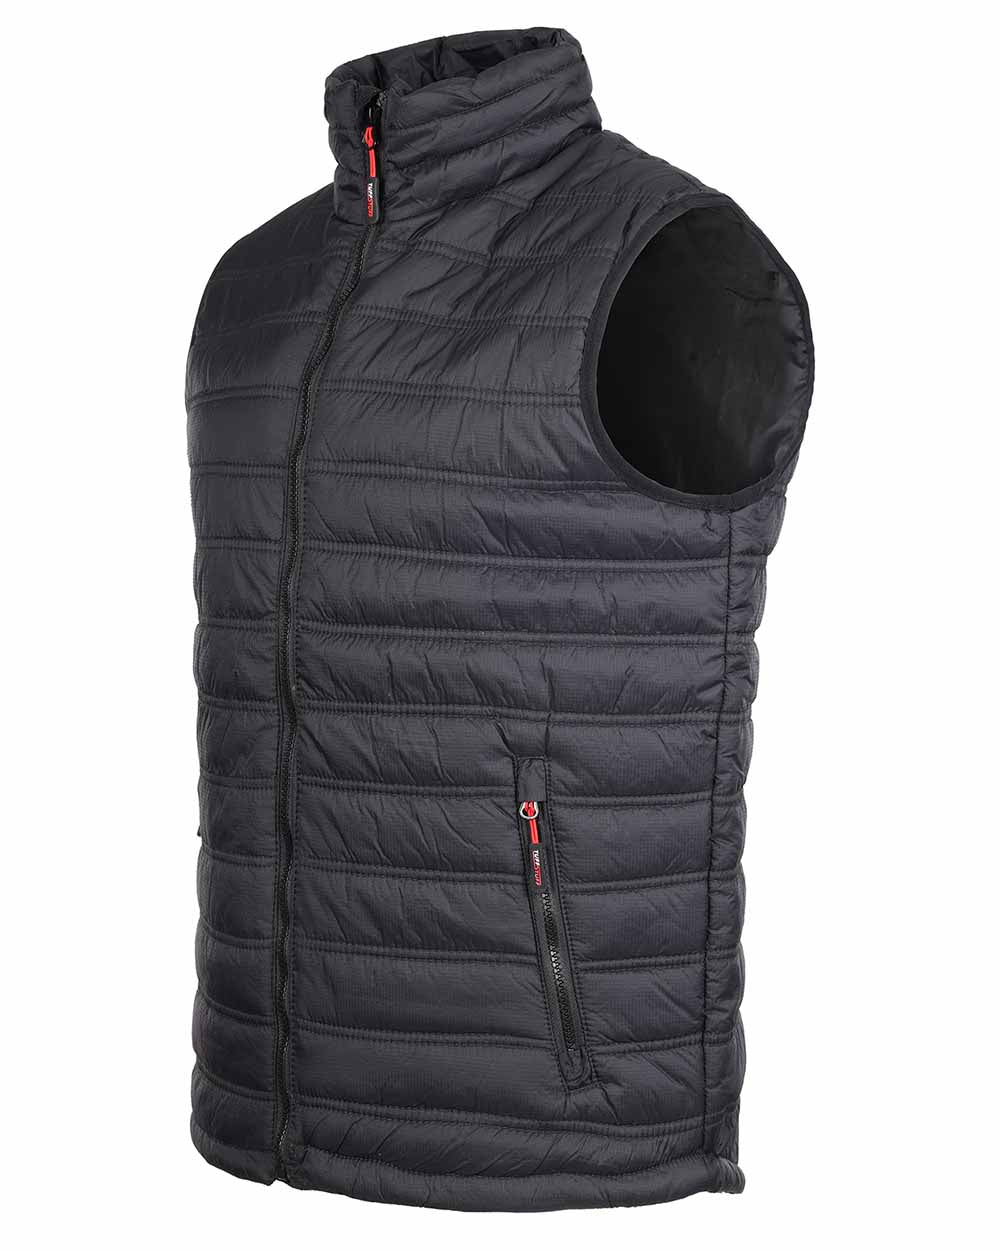 Side view showing zip pockets TuffStuff Elite Quilted Bodywarmer in black